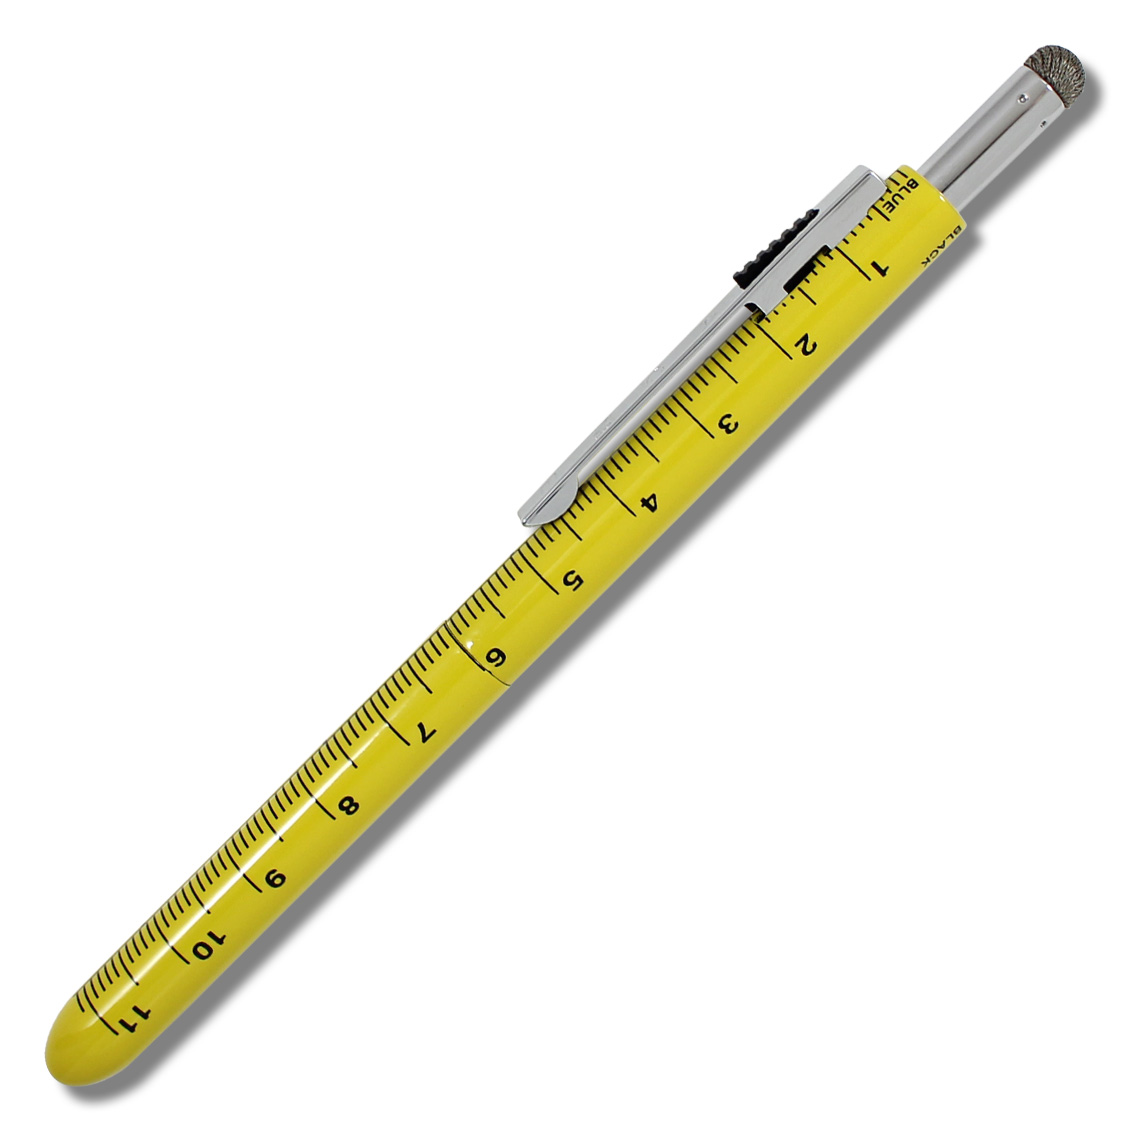 Acme P7FP04 Ruler Seven Function Pen